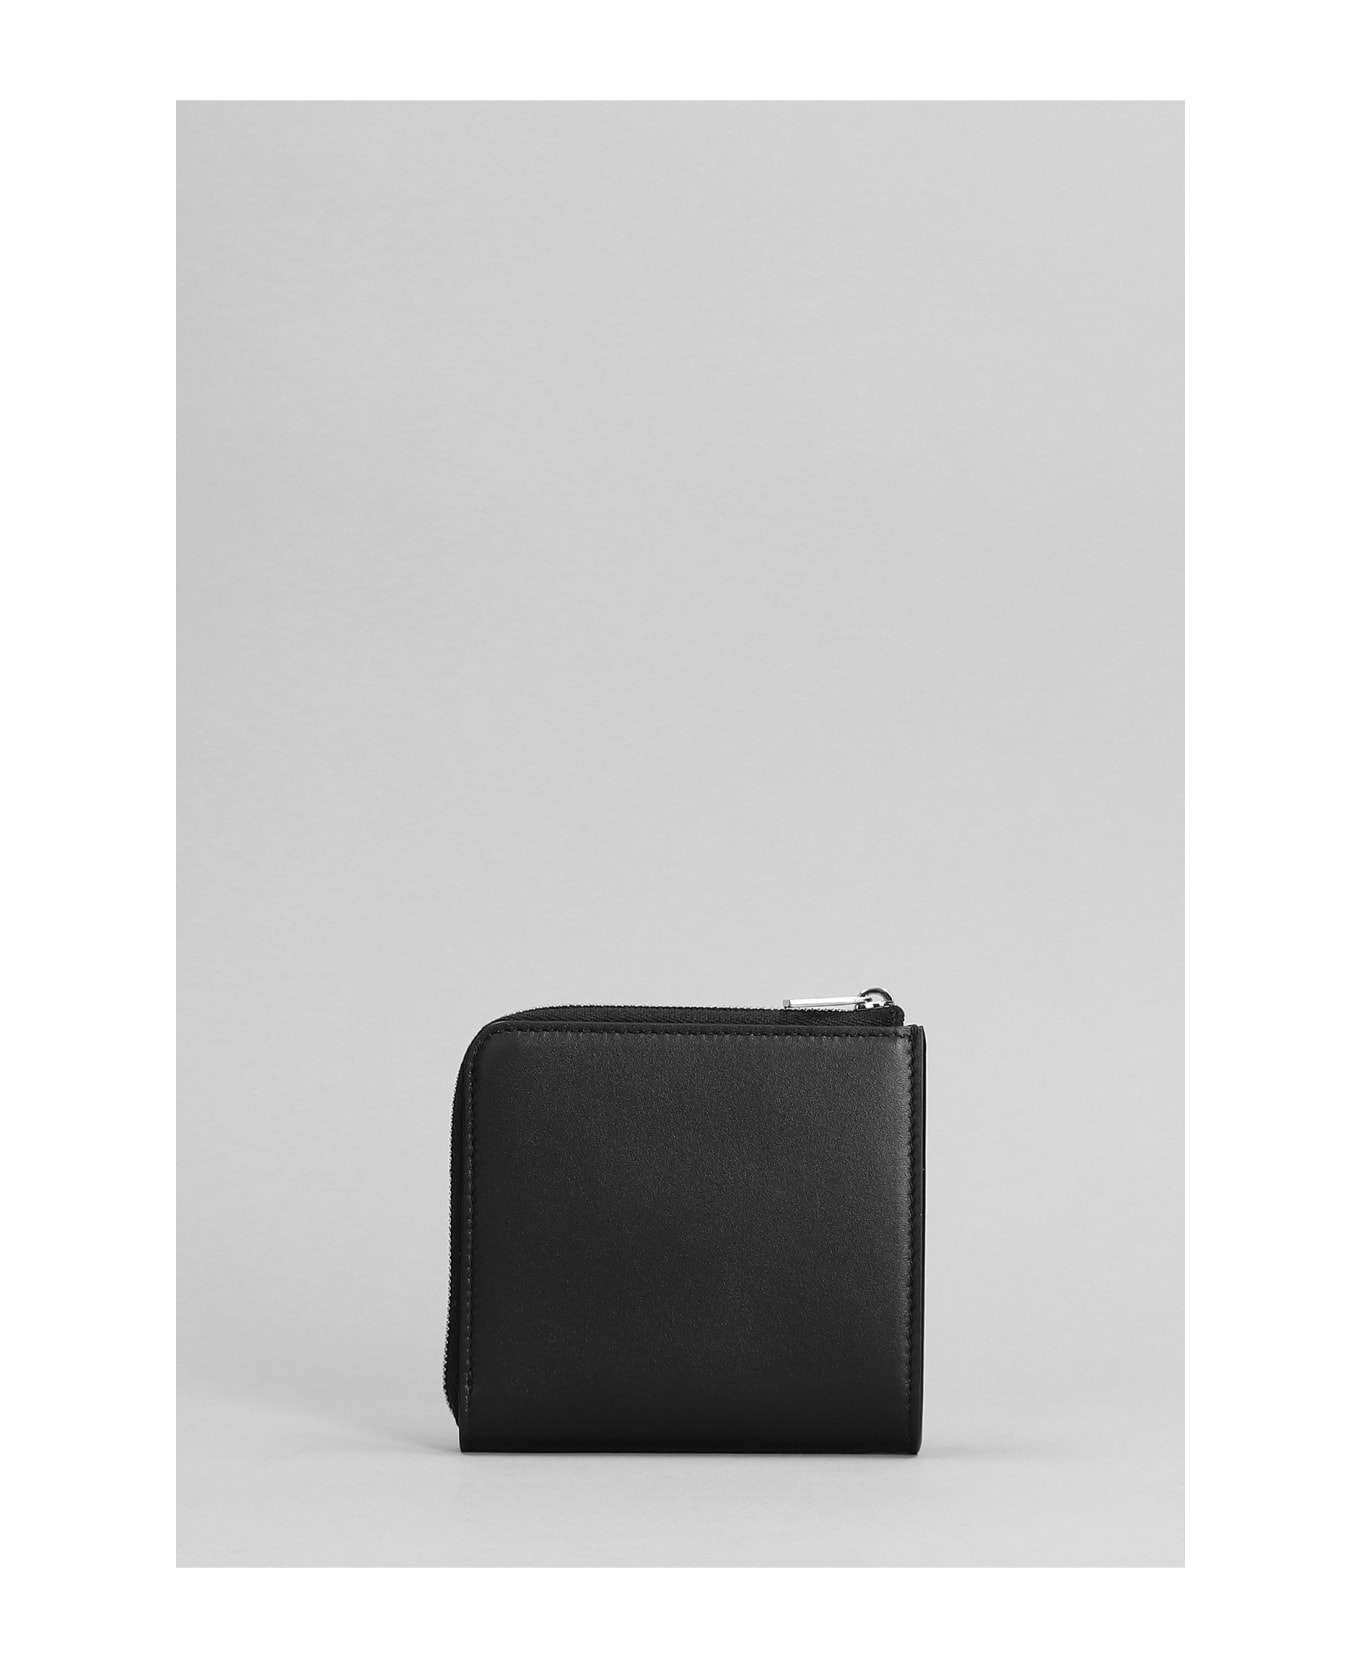 Jil Sander Wallet In Black Leather - black 財布